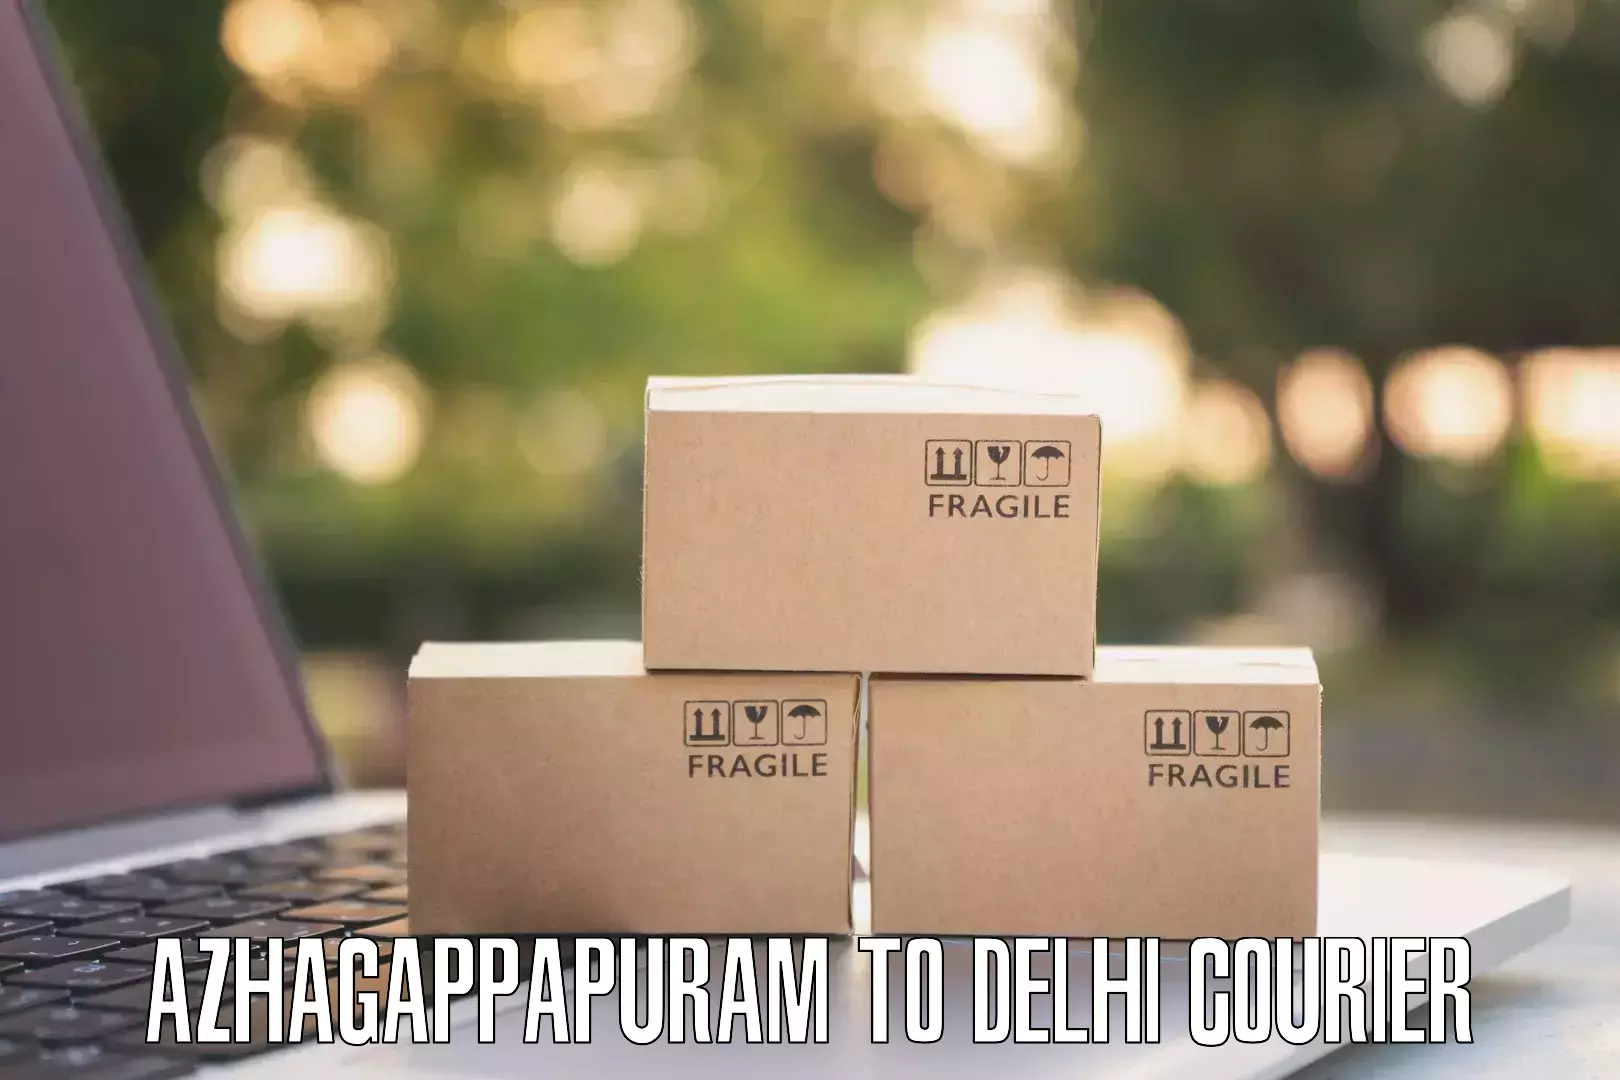 Supply chain efficiency Azhagappapuram to Delhi